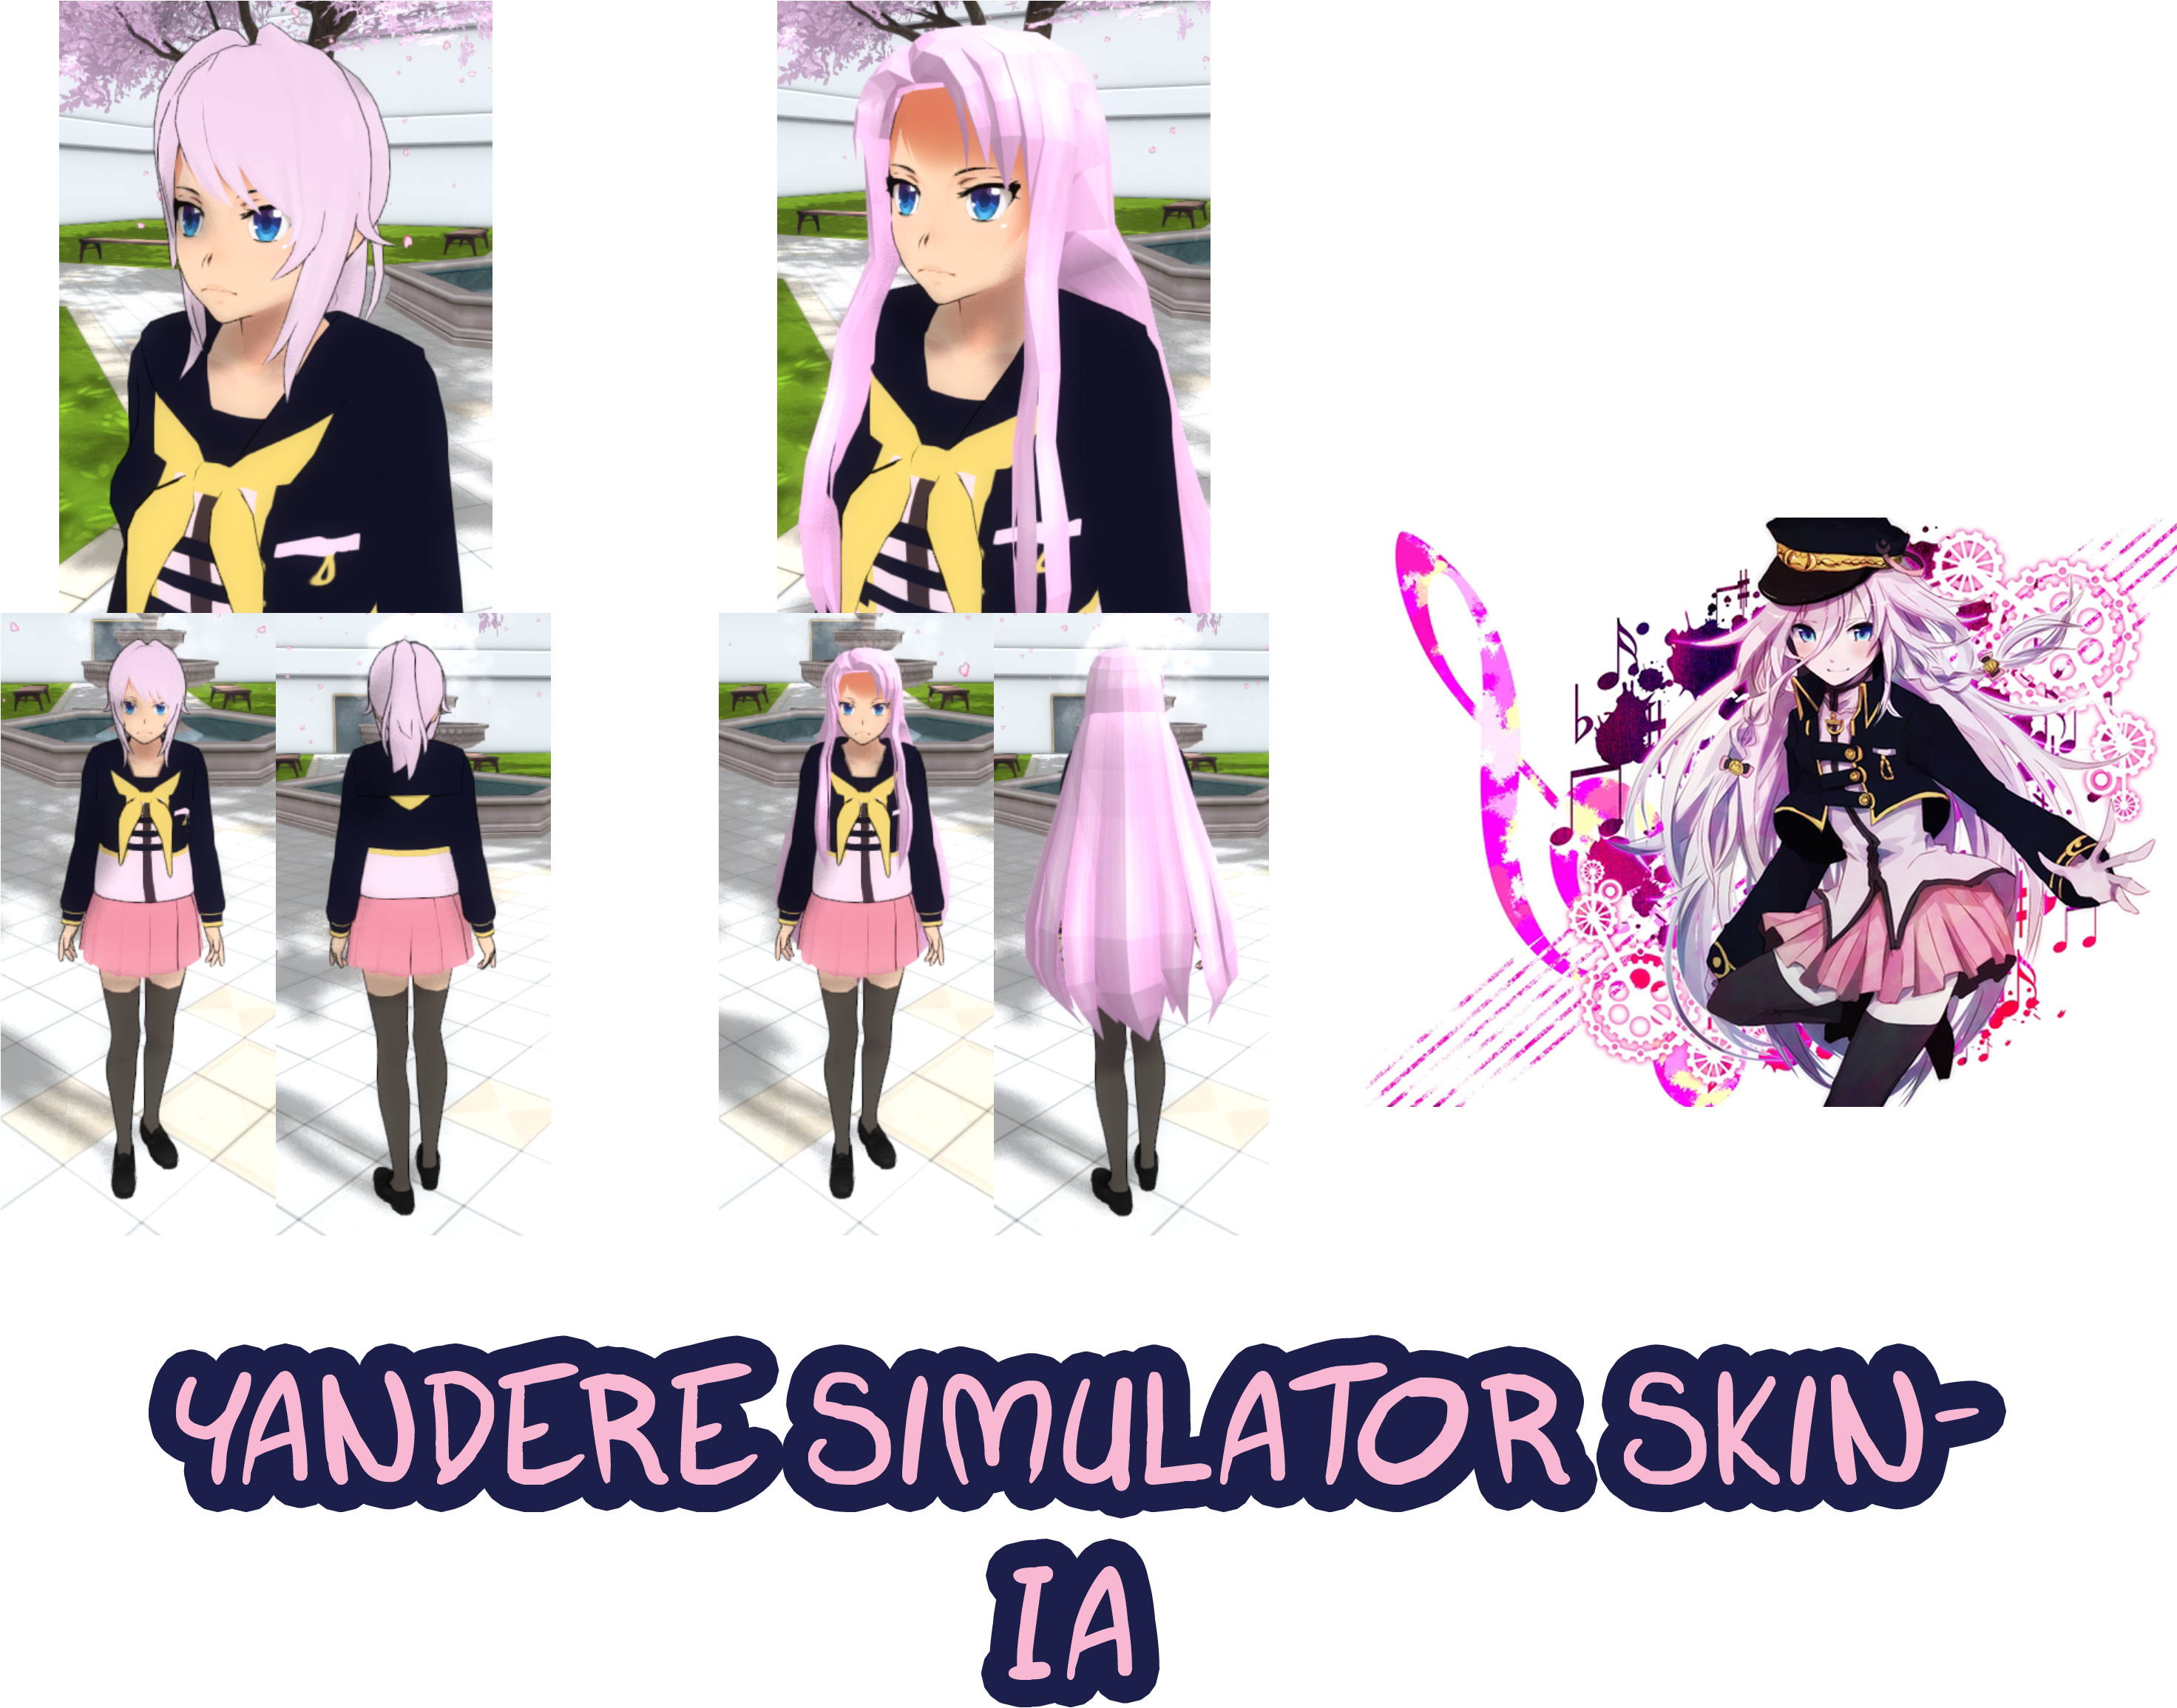 Imaginaryalchemist Yandere Simulator- Ia Skin By Imaginaryalchemist - Yandere Simulator Skin Ia (3136x2453)